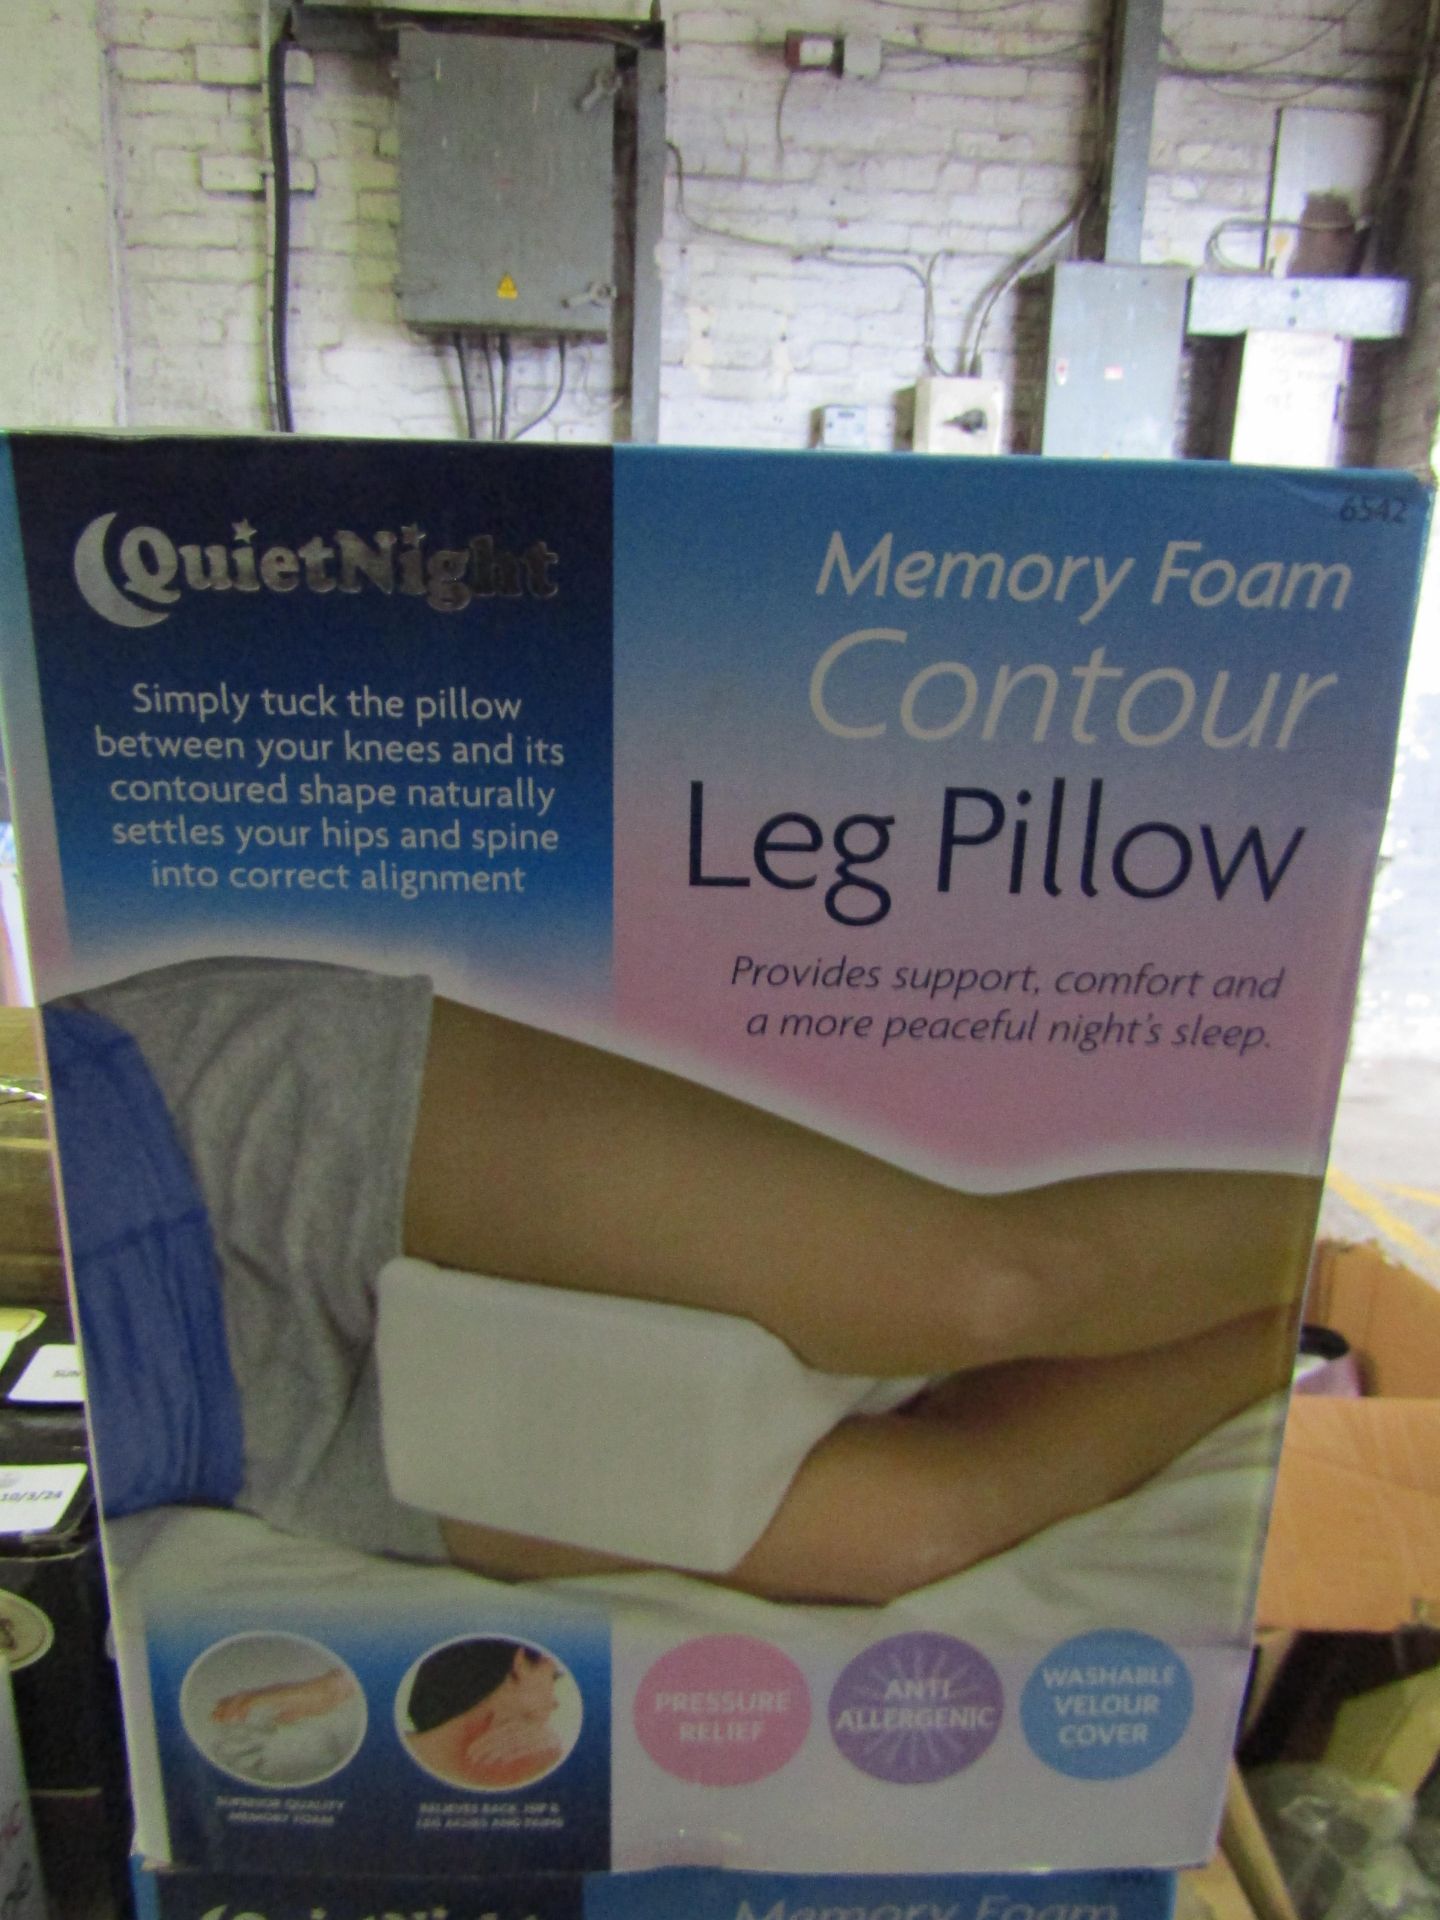 Dreamscape Quietnight Memory Foam Contour Leg Pillow Look Unused & Boxed